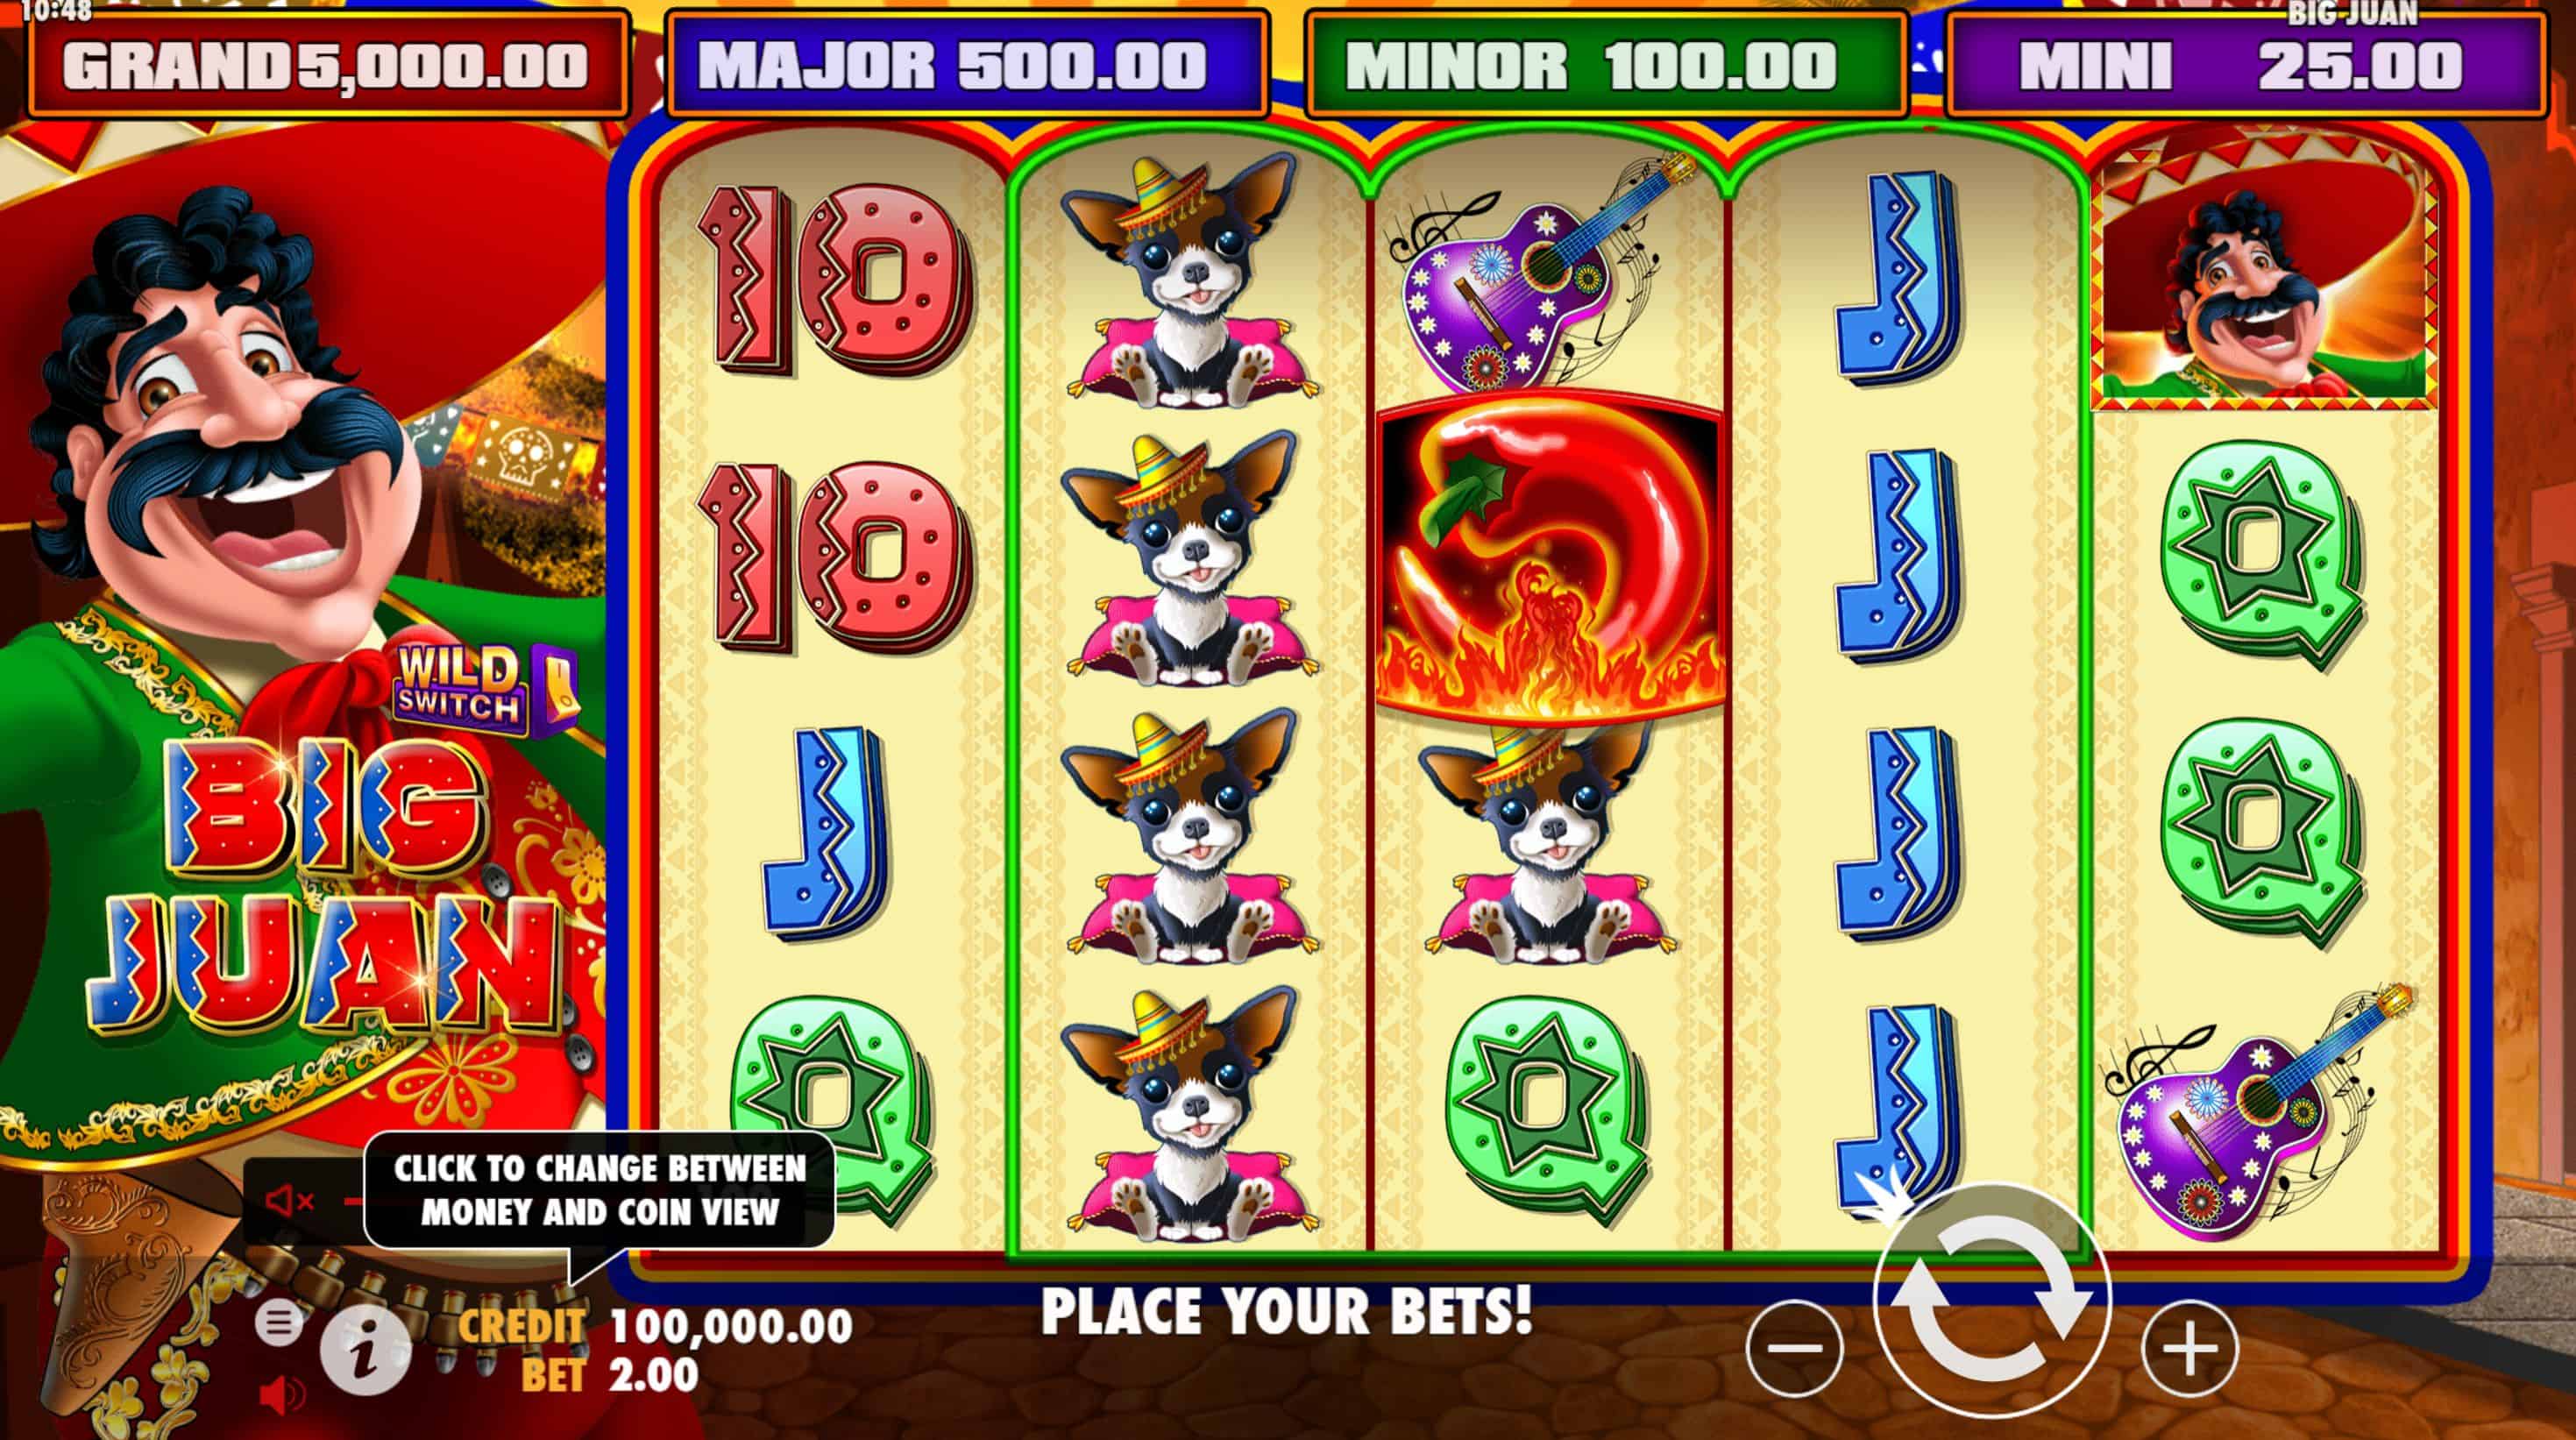 Big Juan Slot Game Free Play at Casino Ireland 01